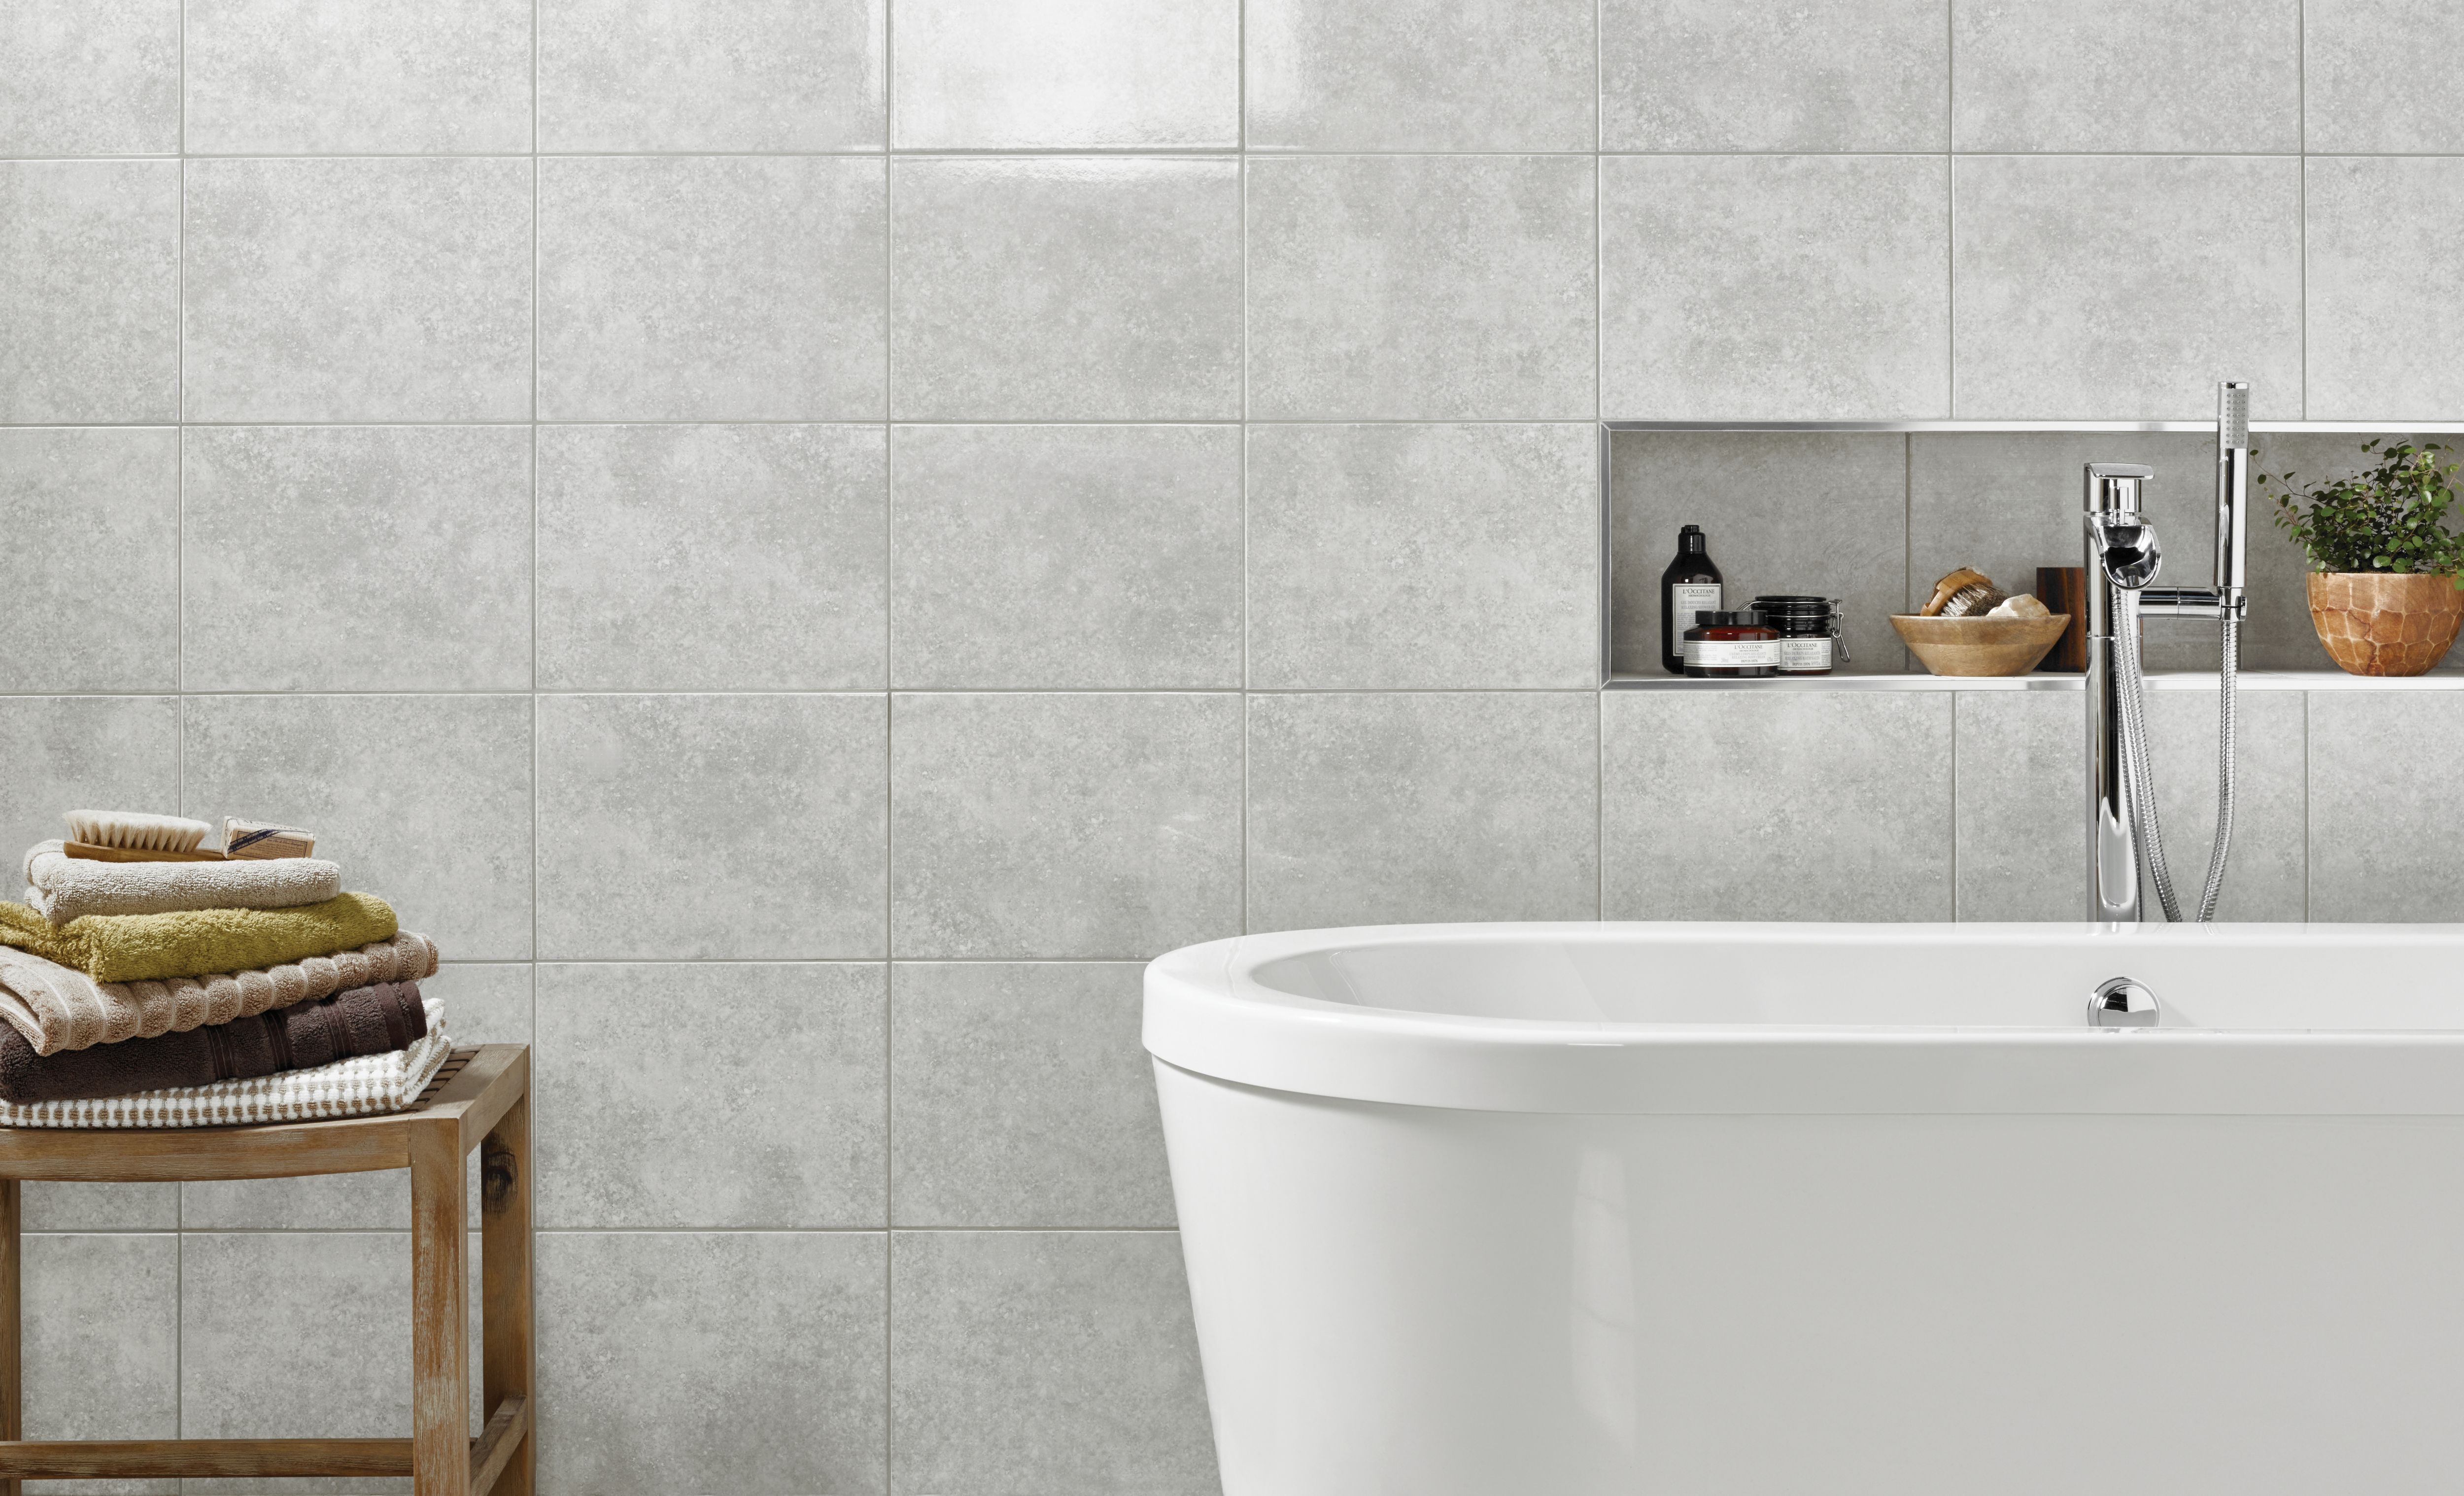 Image of Wickes Tivoli Grey Ceramic Wall Tile - 330 x 250mm